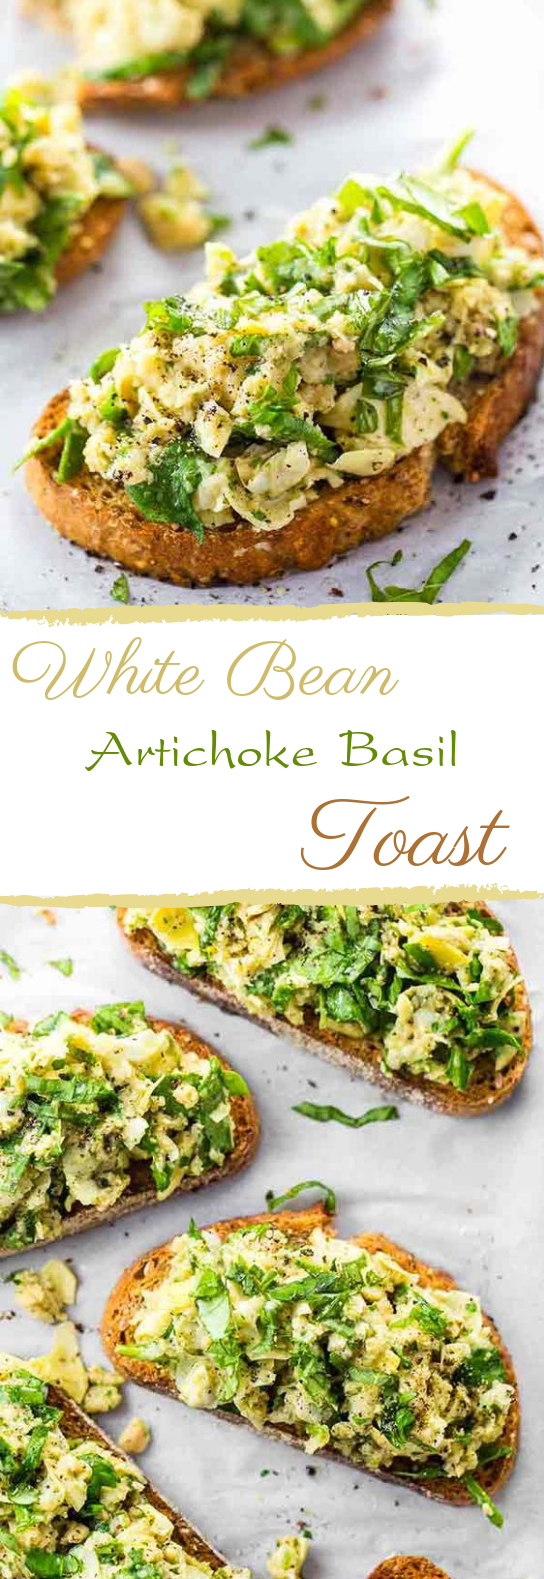 White Bean Artichoke Basil Toasts #breakfast #vegetarian